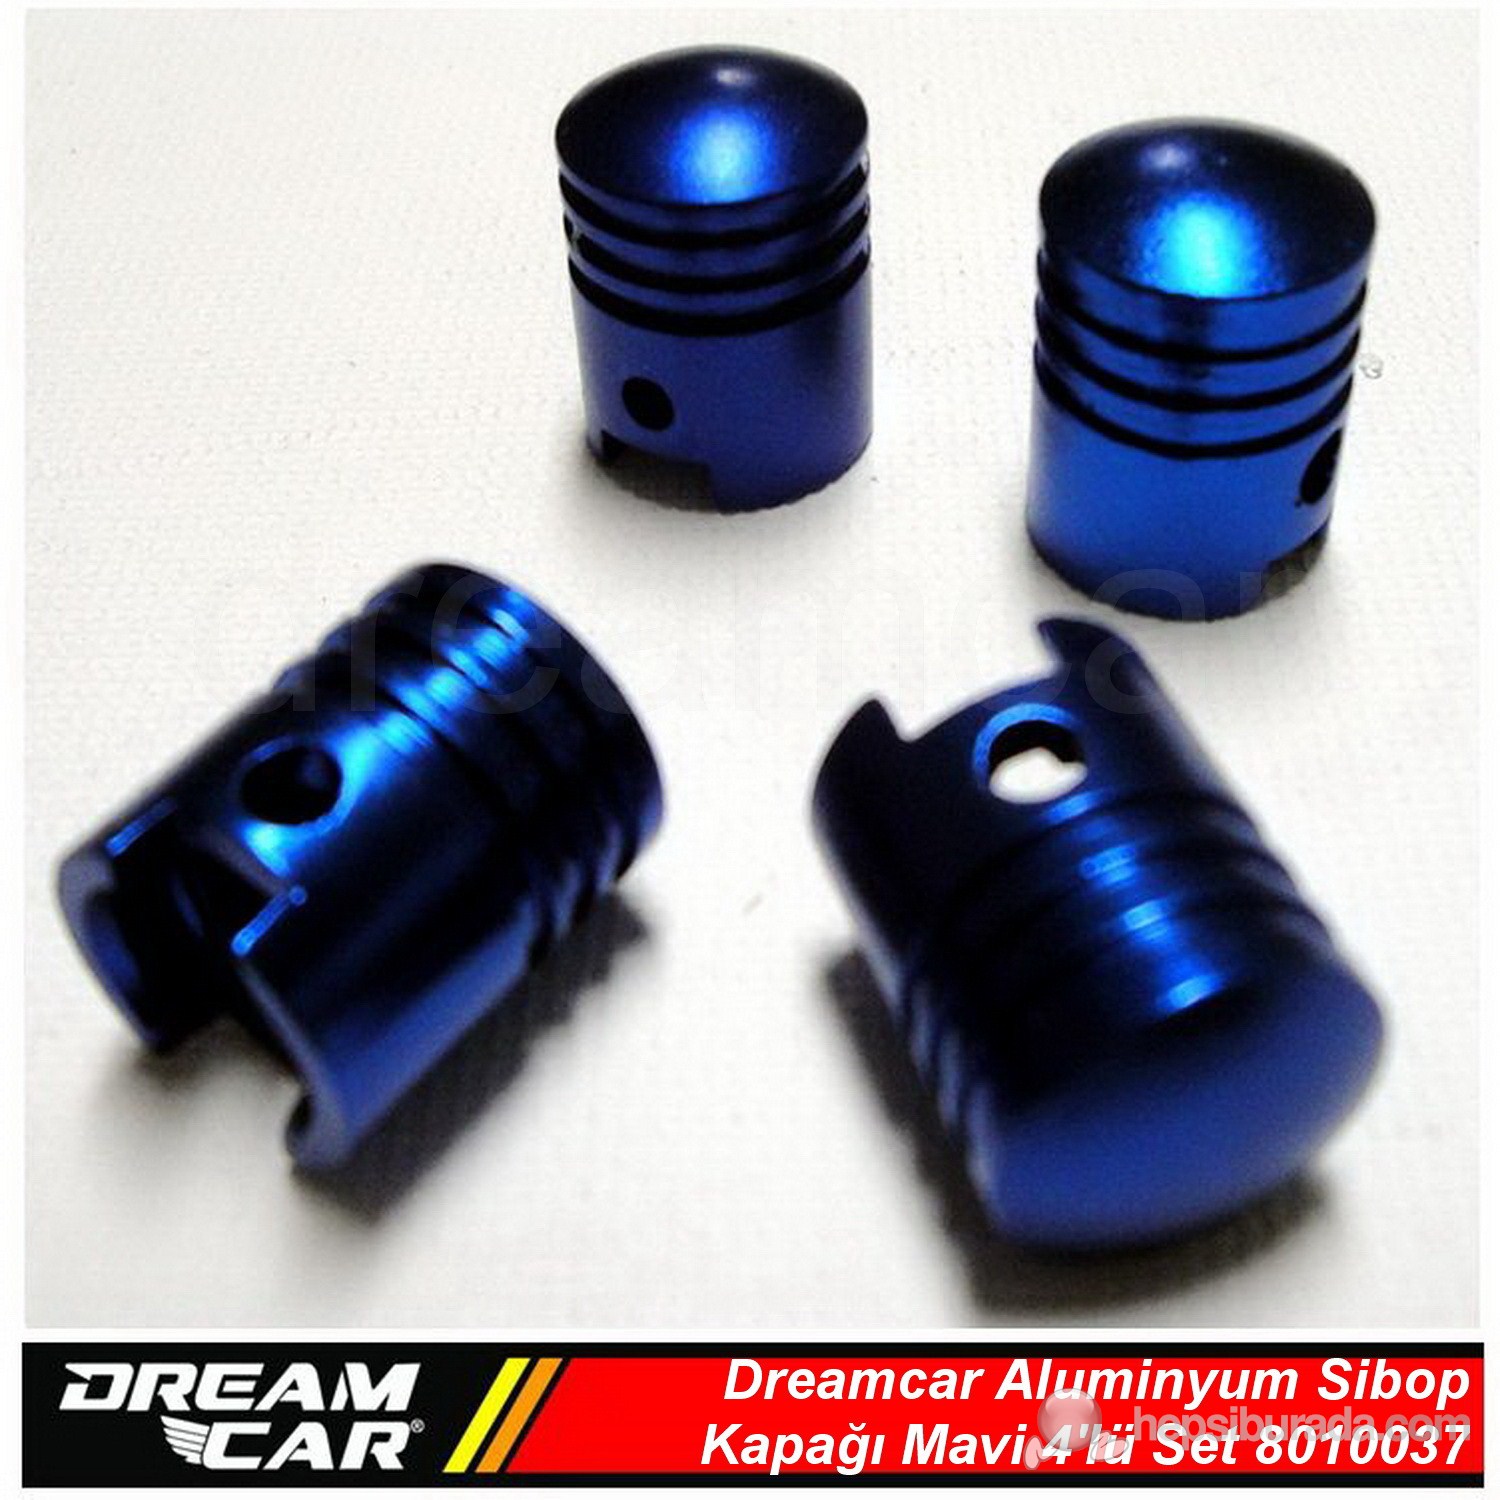 Dreamcar Aluminyum Sibop Kapağı 4'lü Set Mavi 8010037